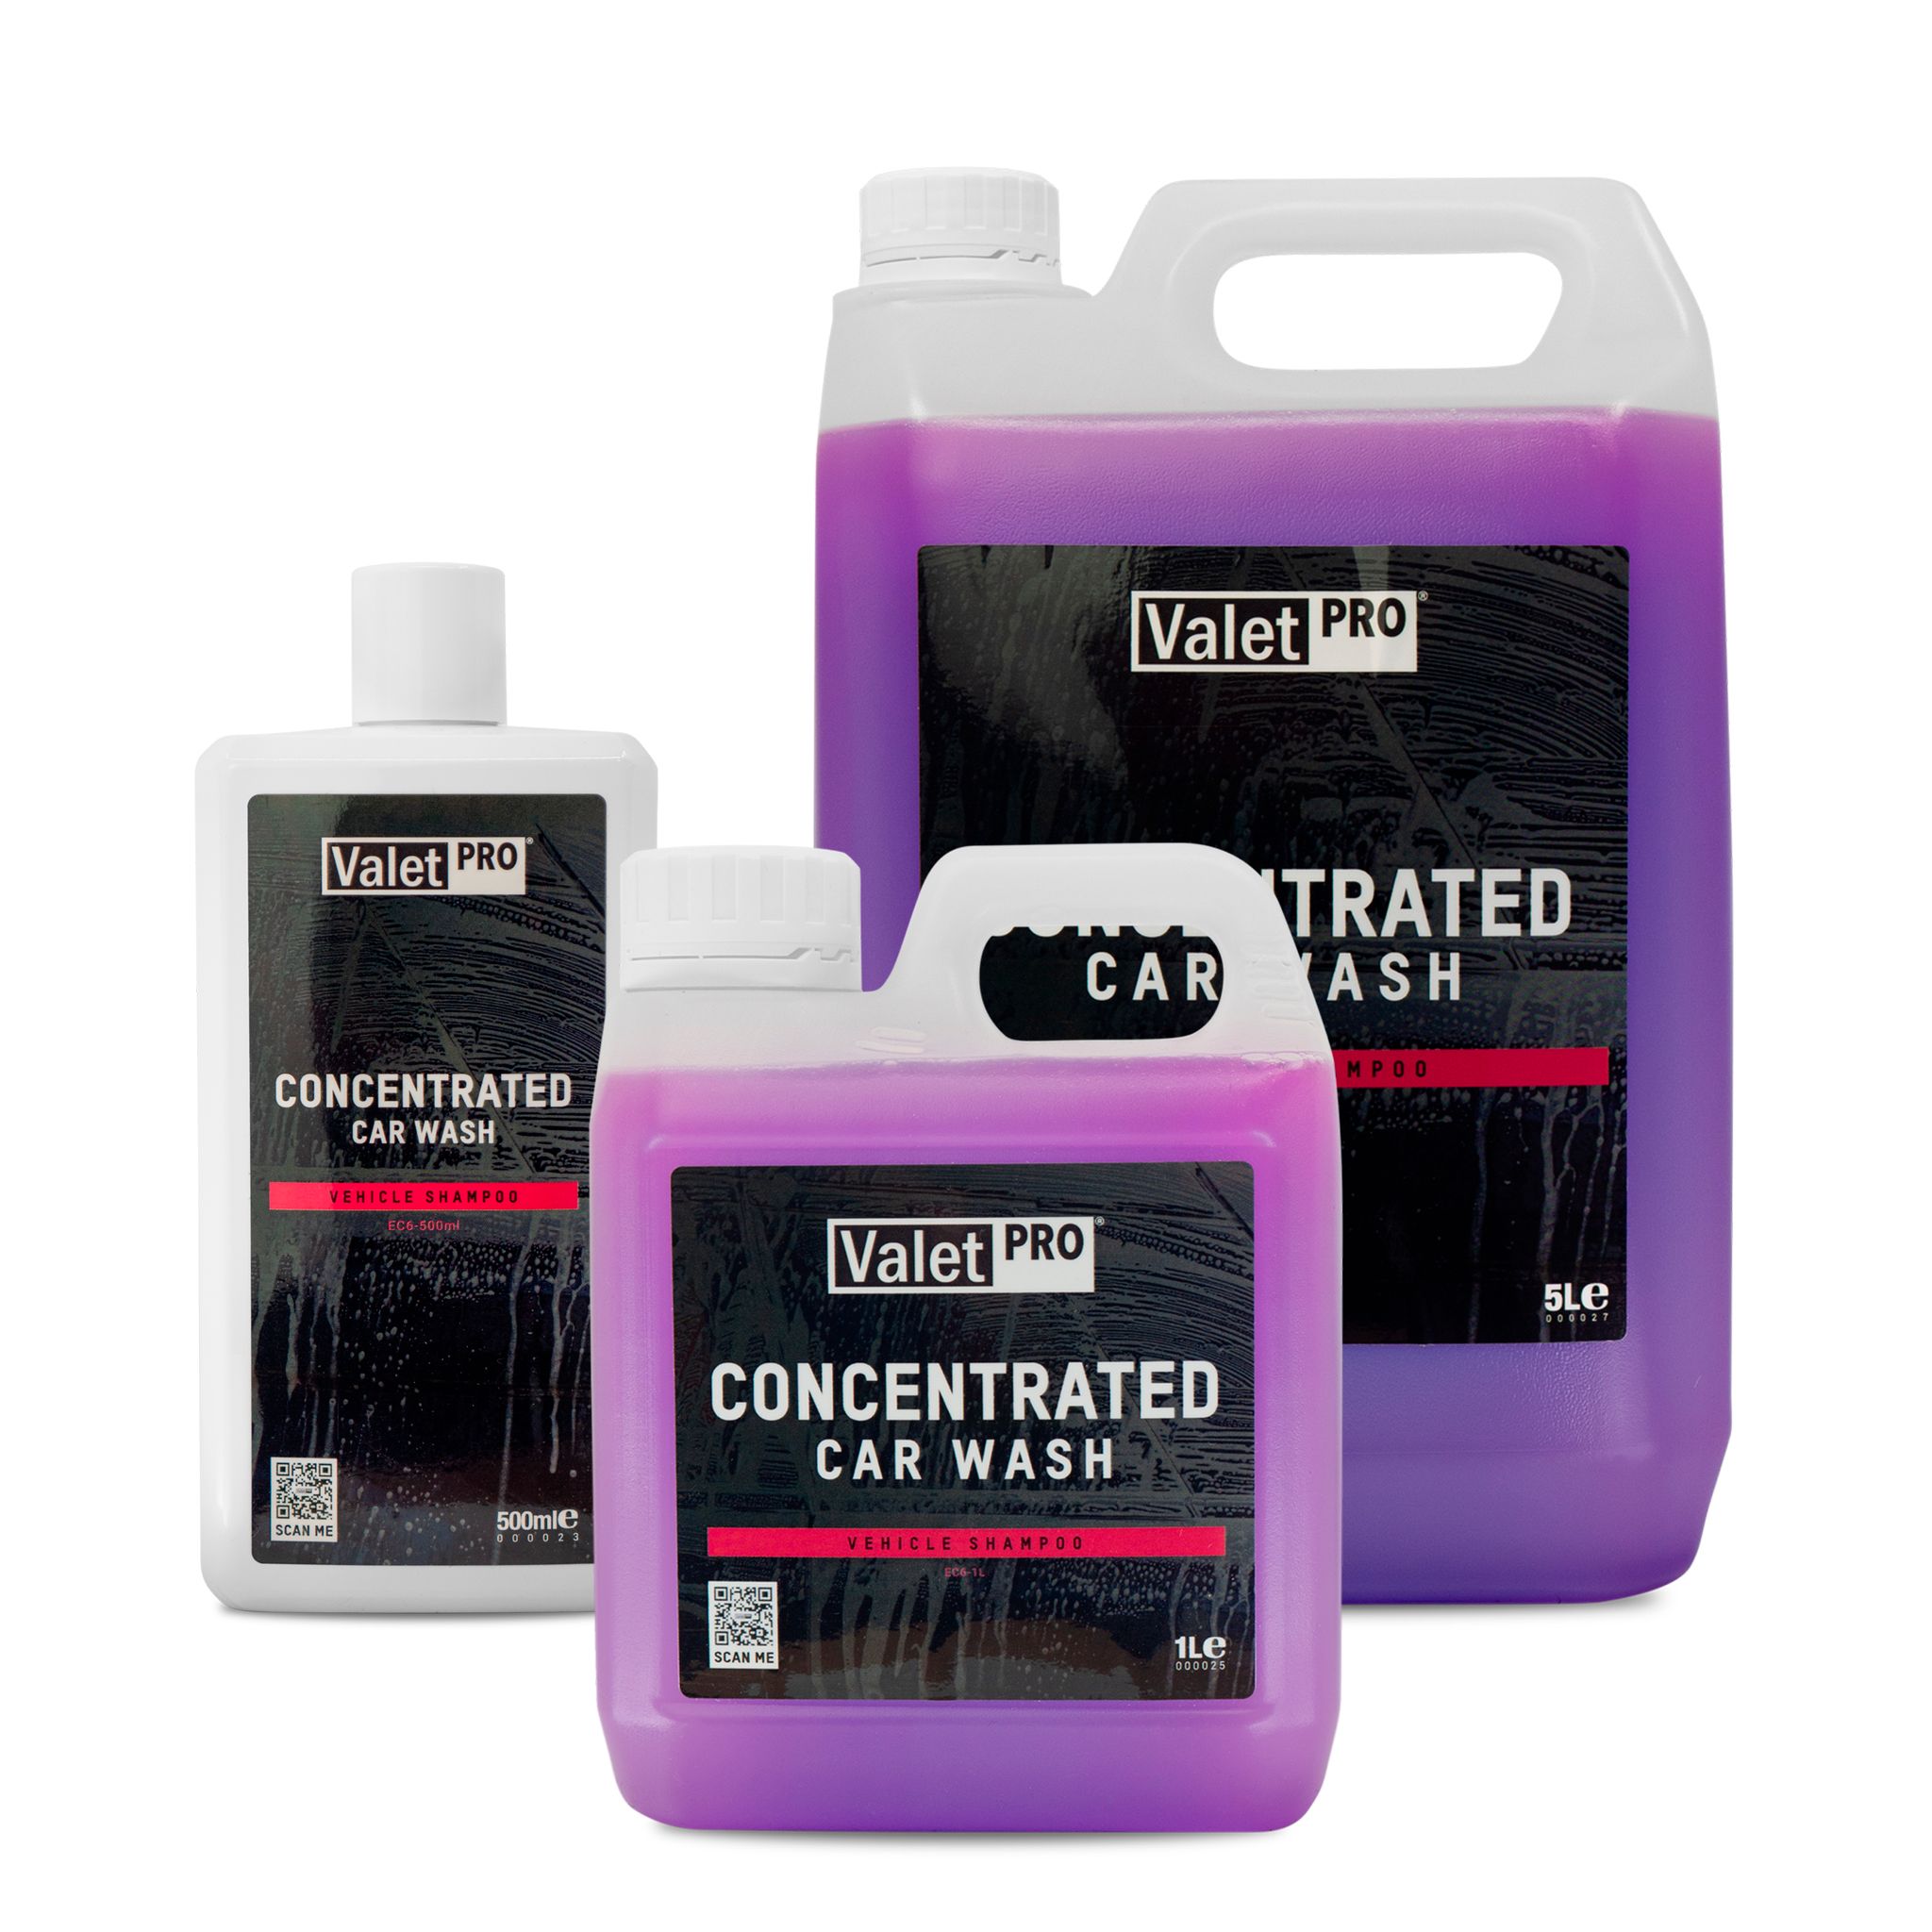 Bilschampo ValetPRO Concentrated Car Wash, 500 ml